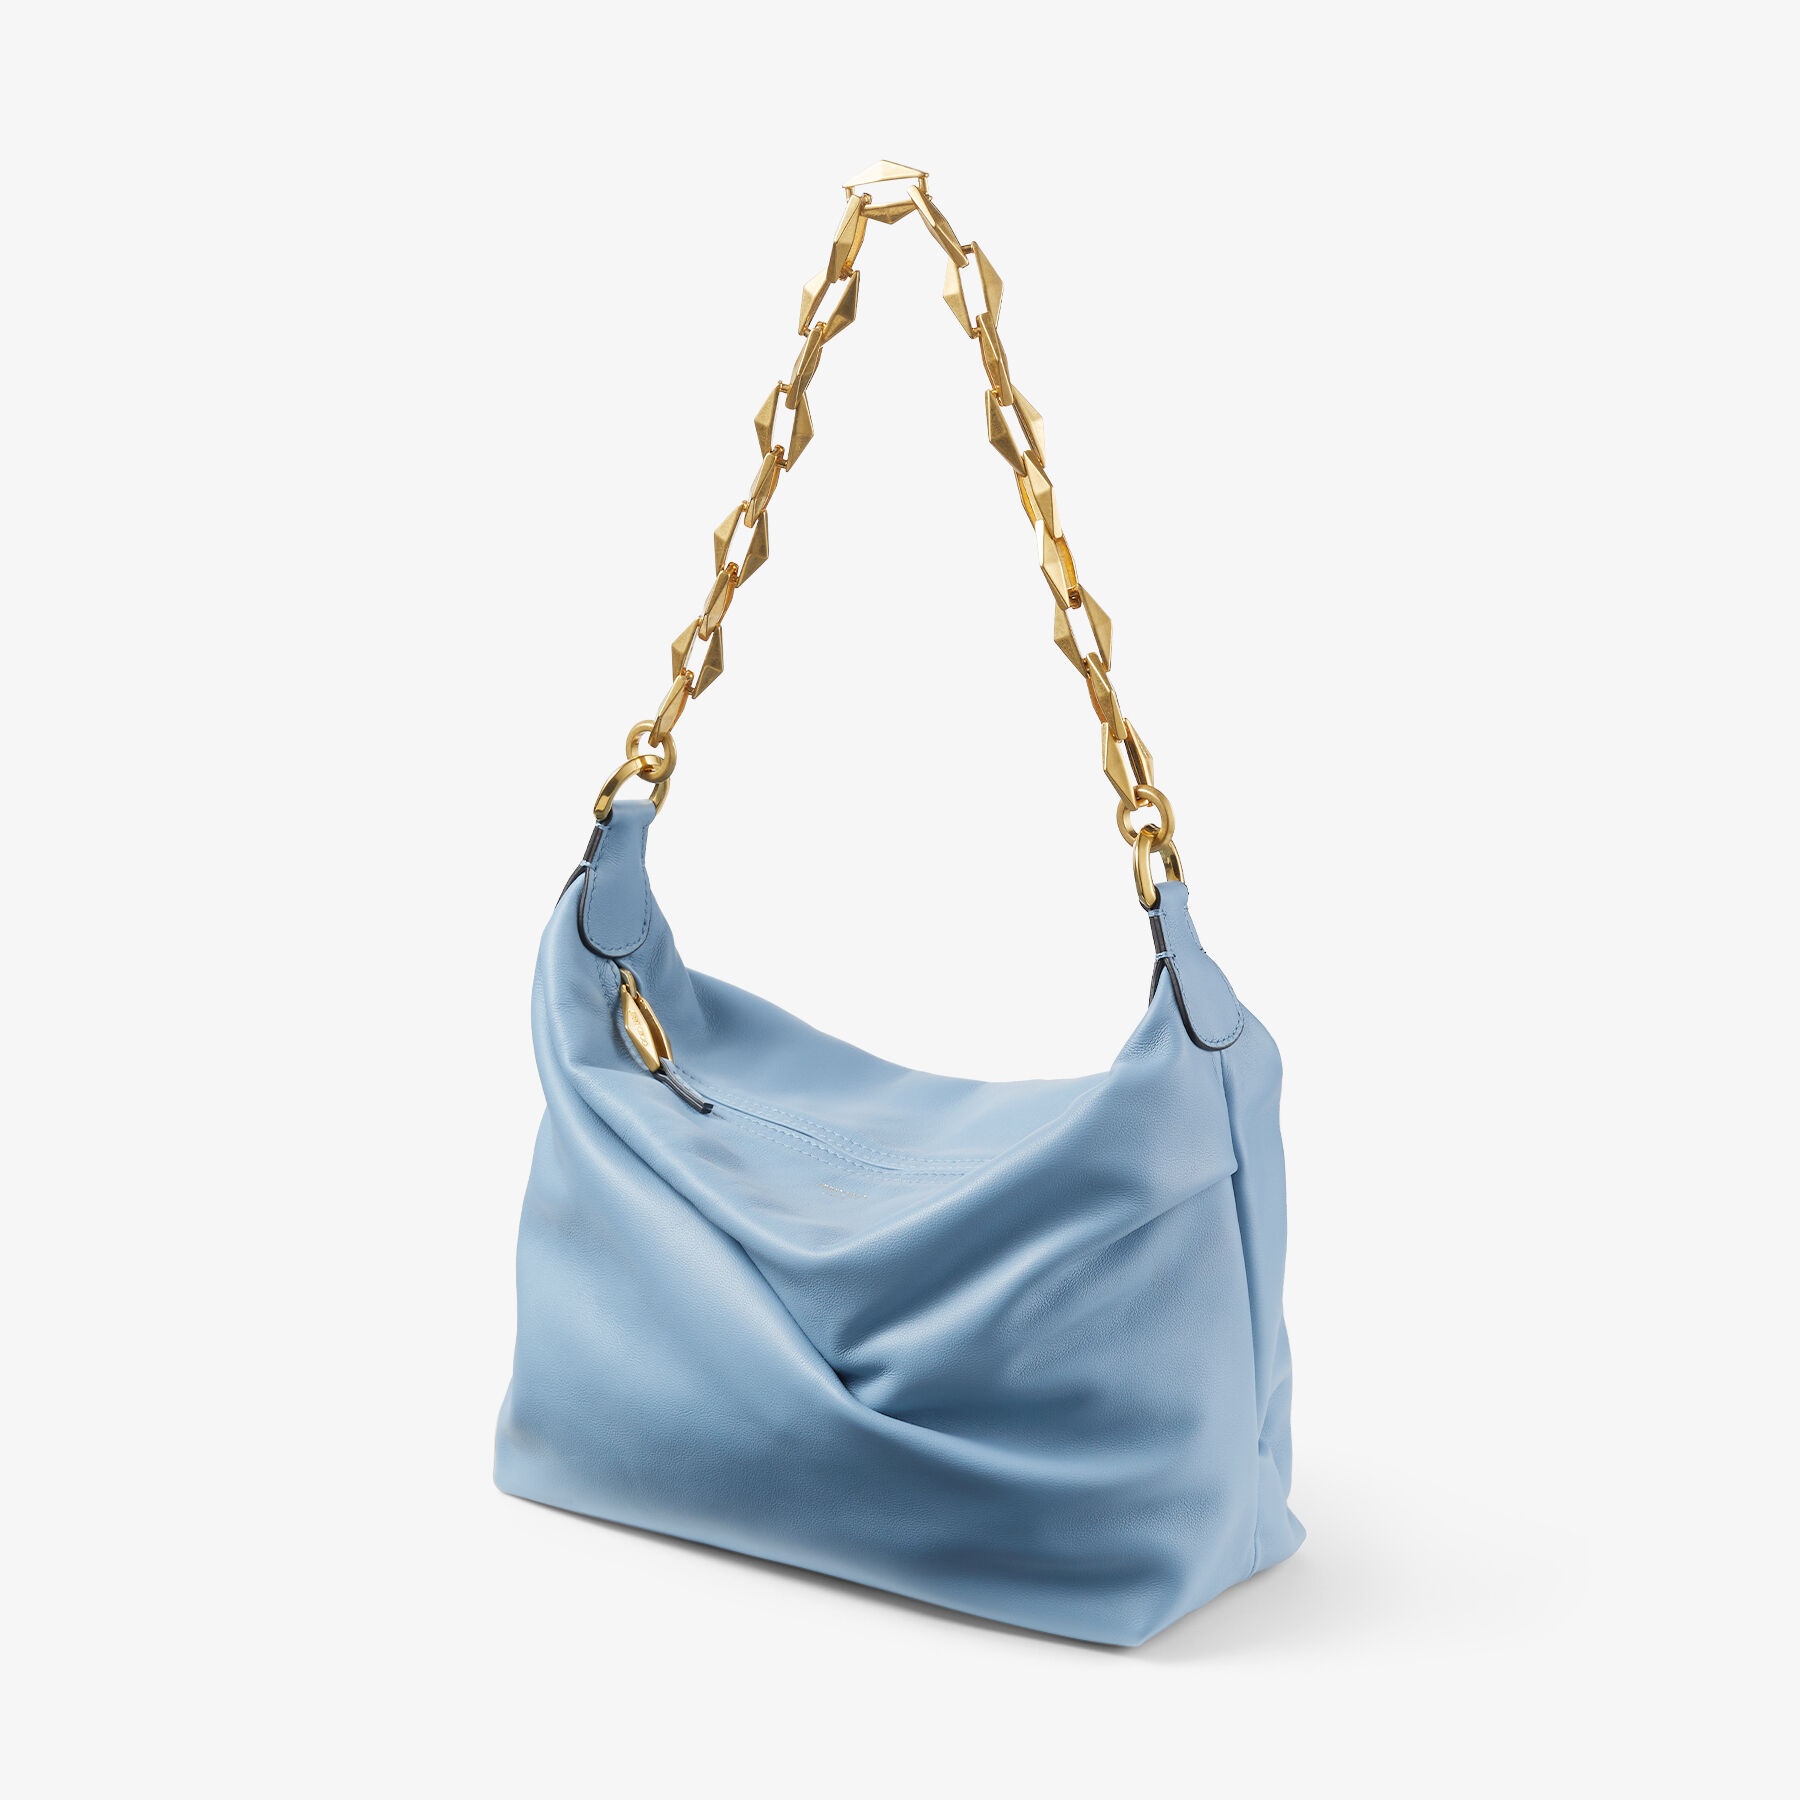 Diamond Soft Hobo S
Smoky Blue Soft Calf Leather Hobo Bag with Chain Strap - 4